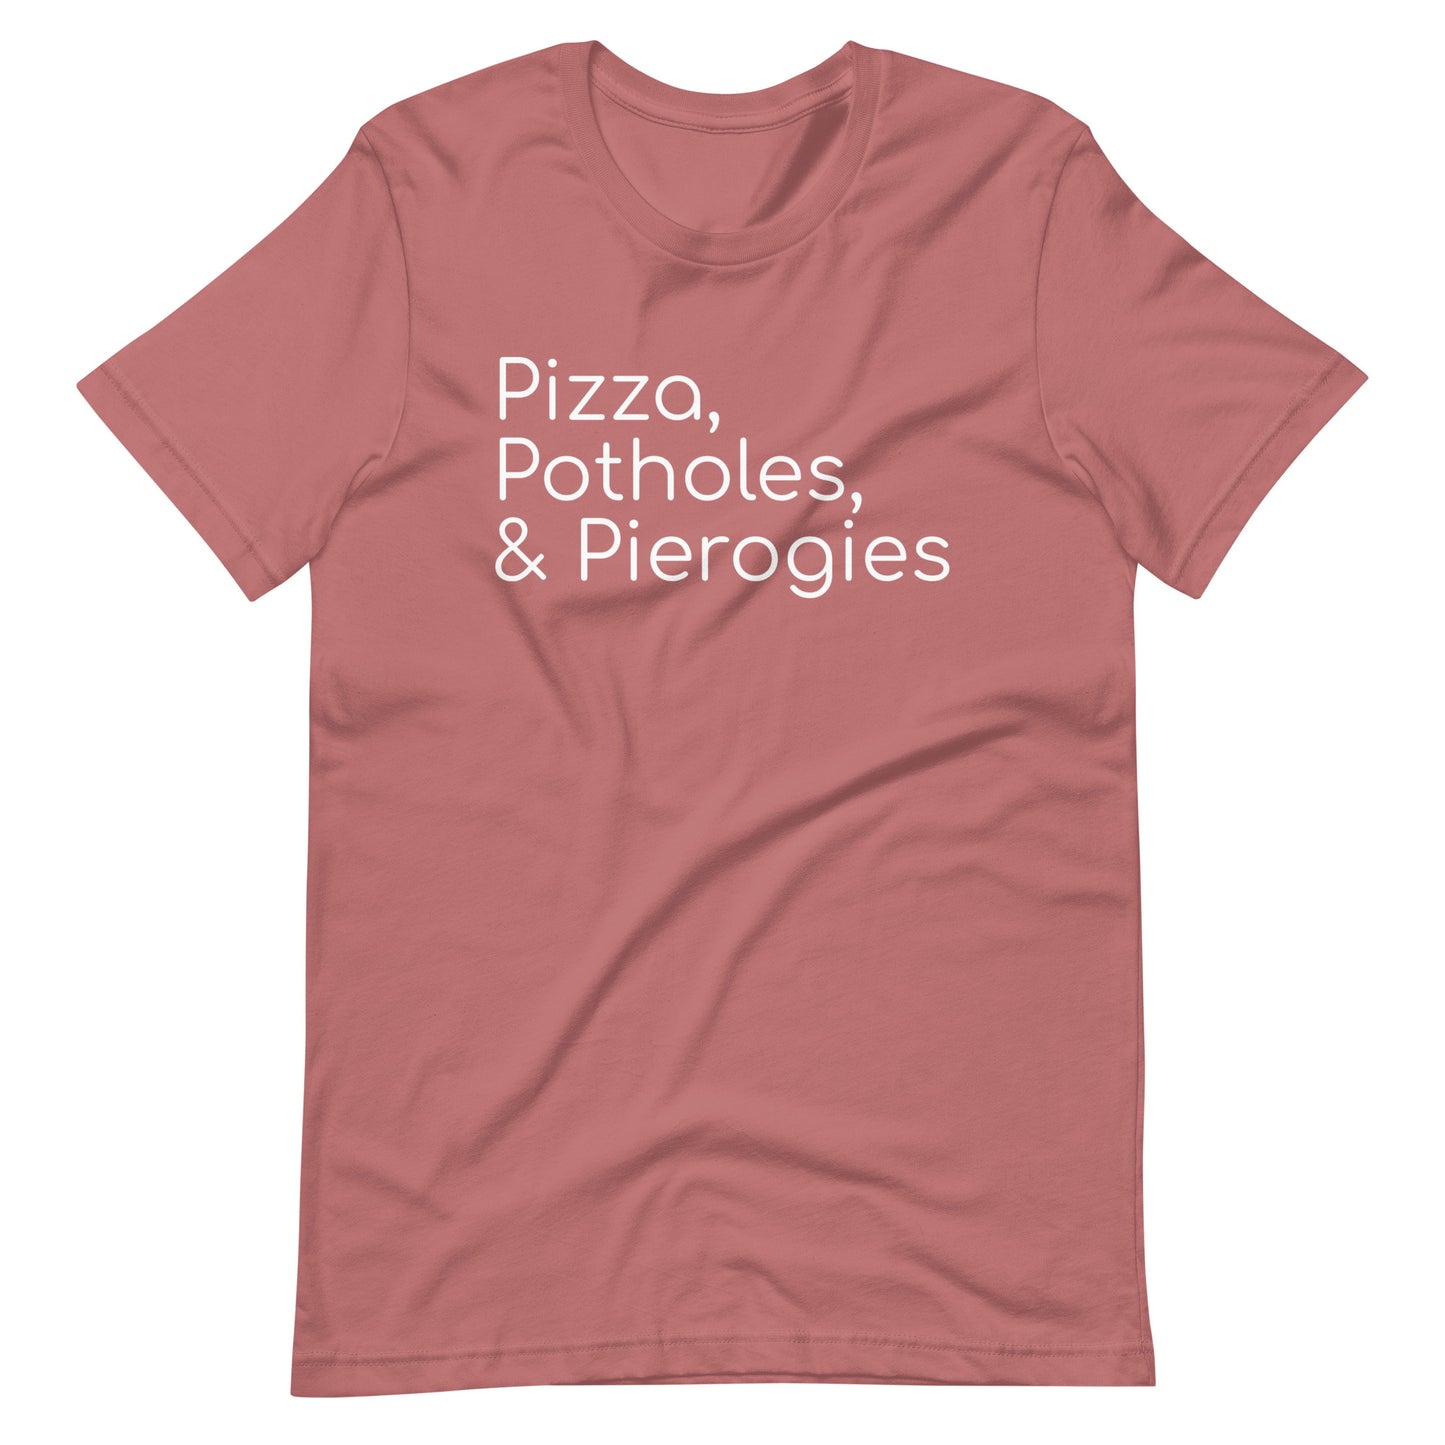 Pizza, Potholes, & Pierogies Tee